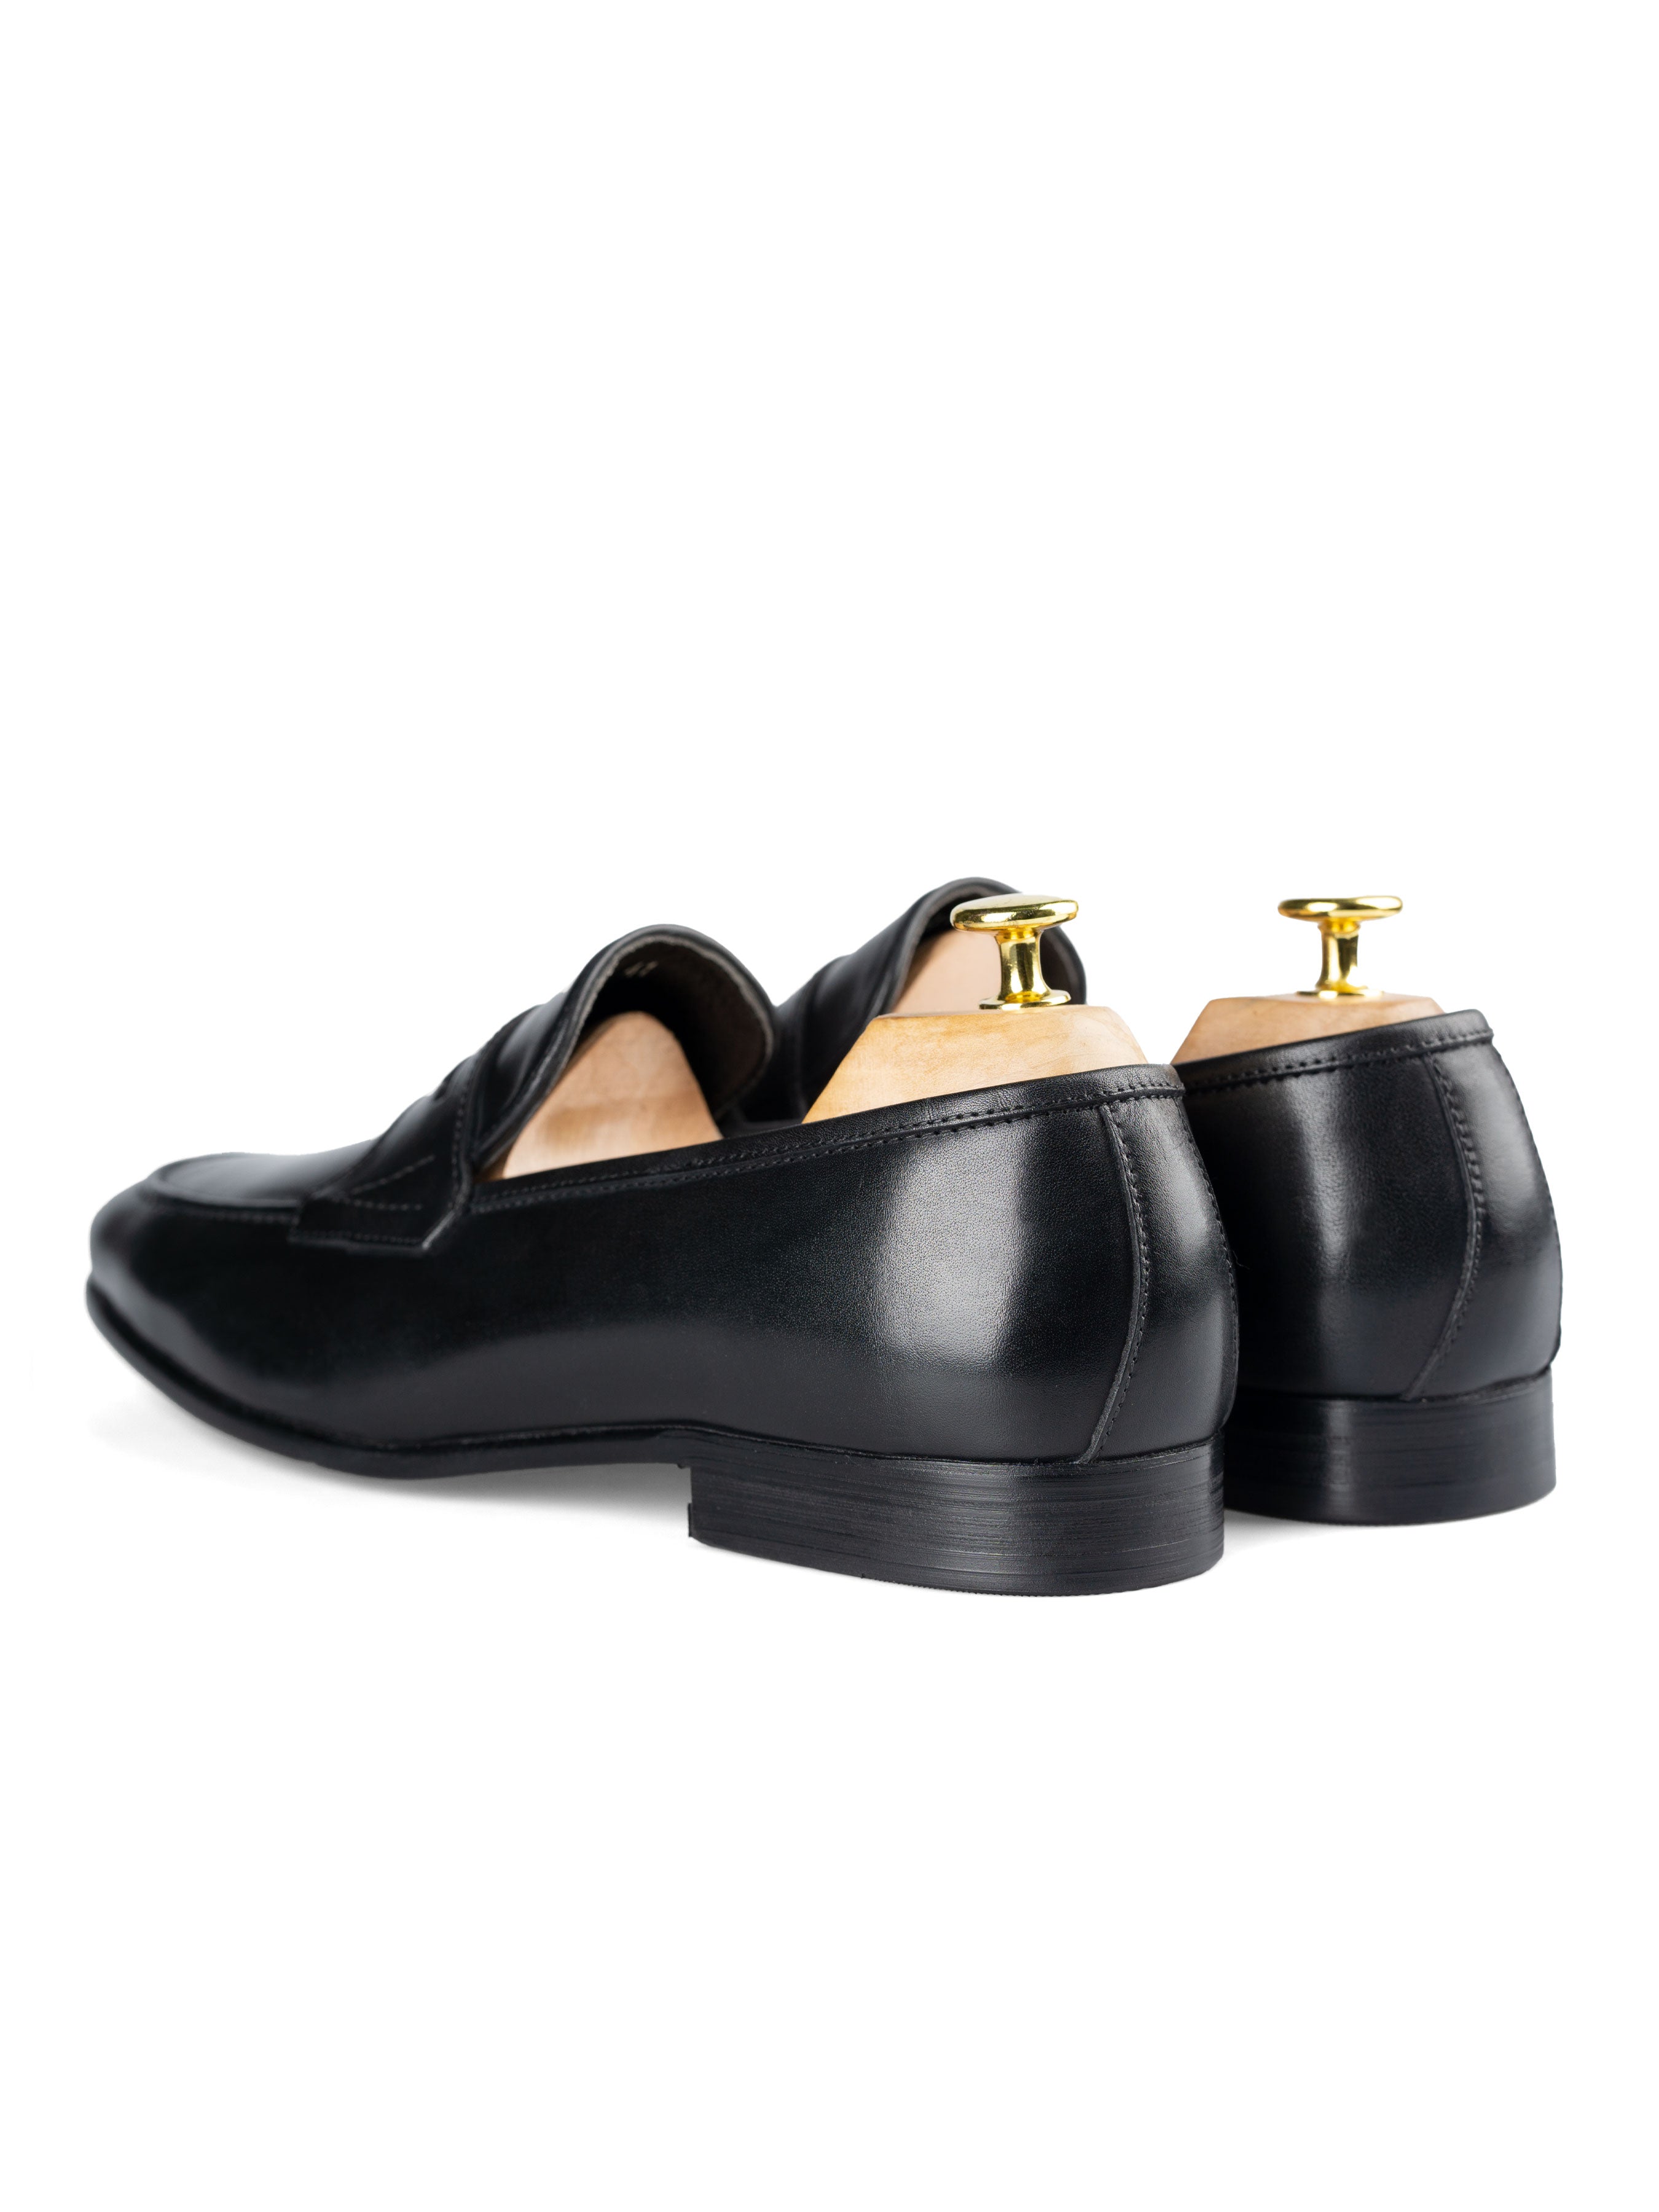 Penny Loafer Wing Strap - Solid Black - Zeve Shoes